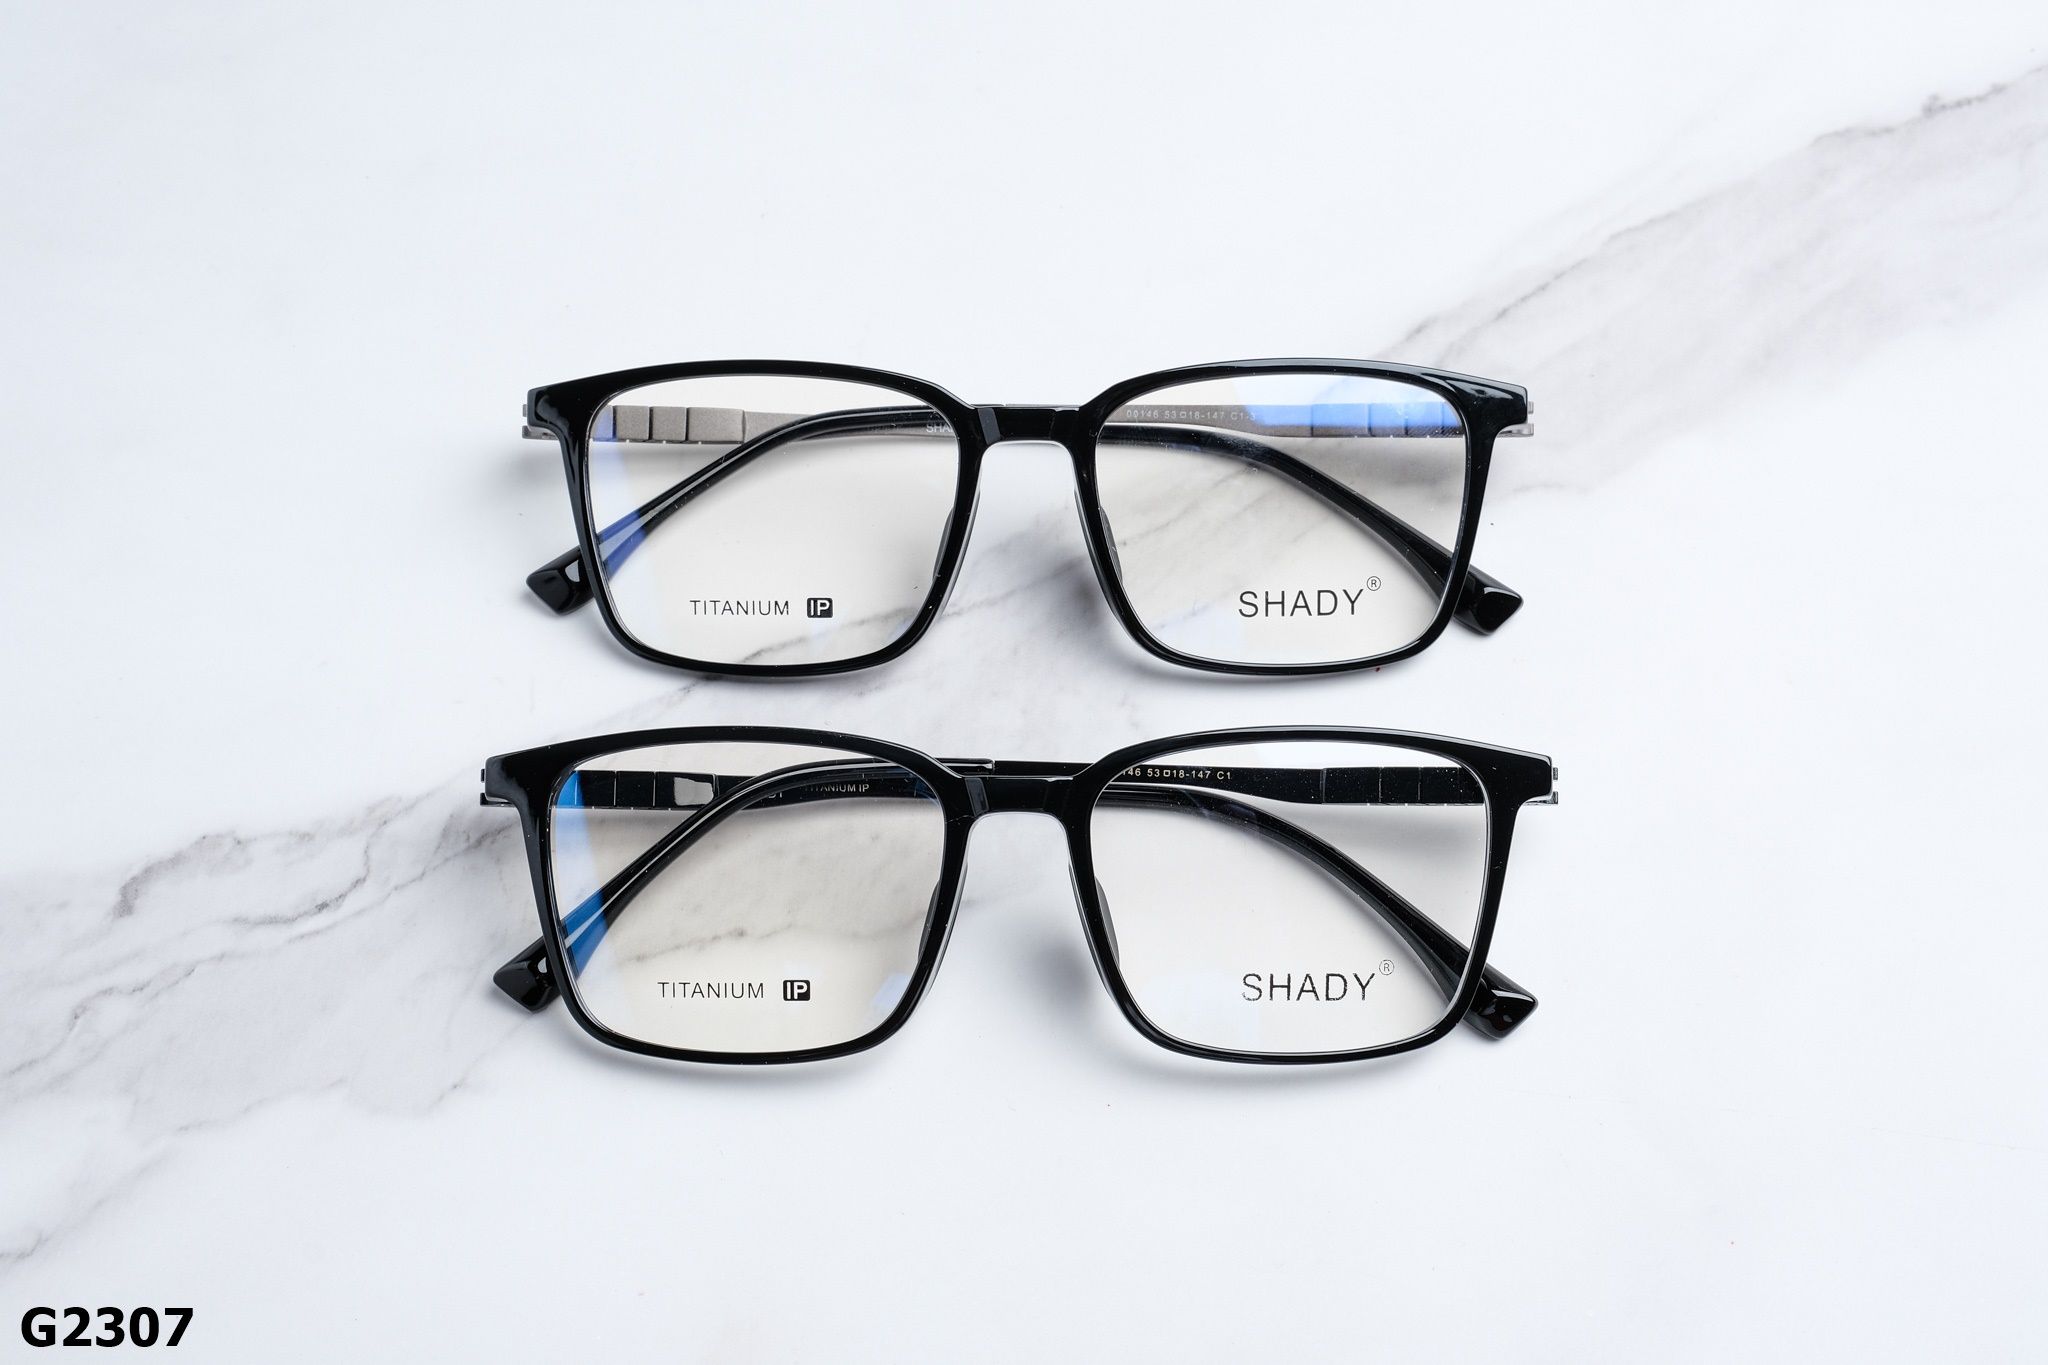  SHADY Eyewear - Glasses - G2307 